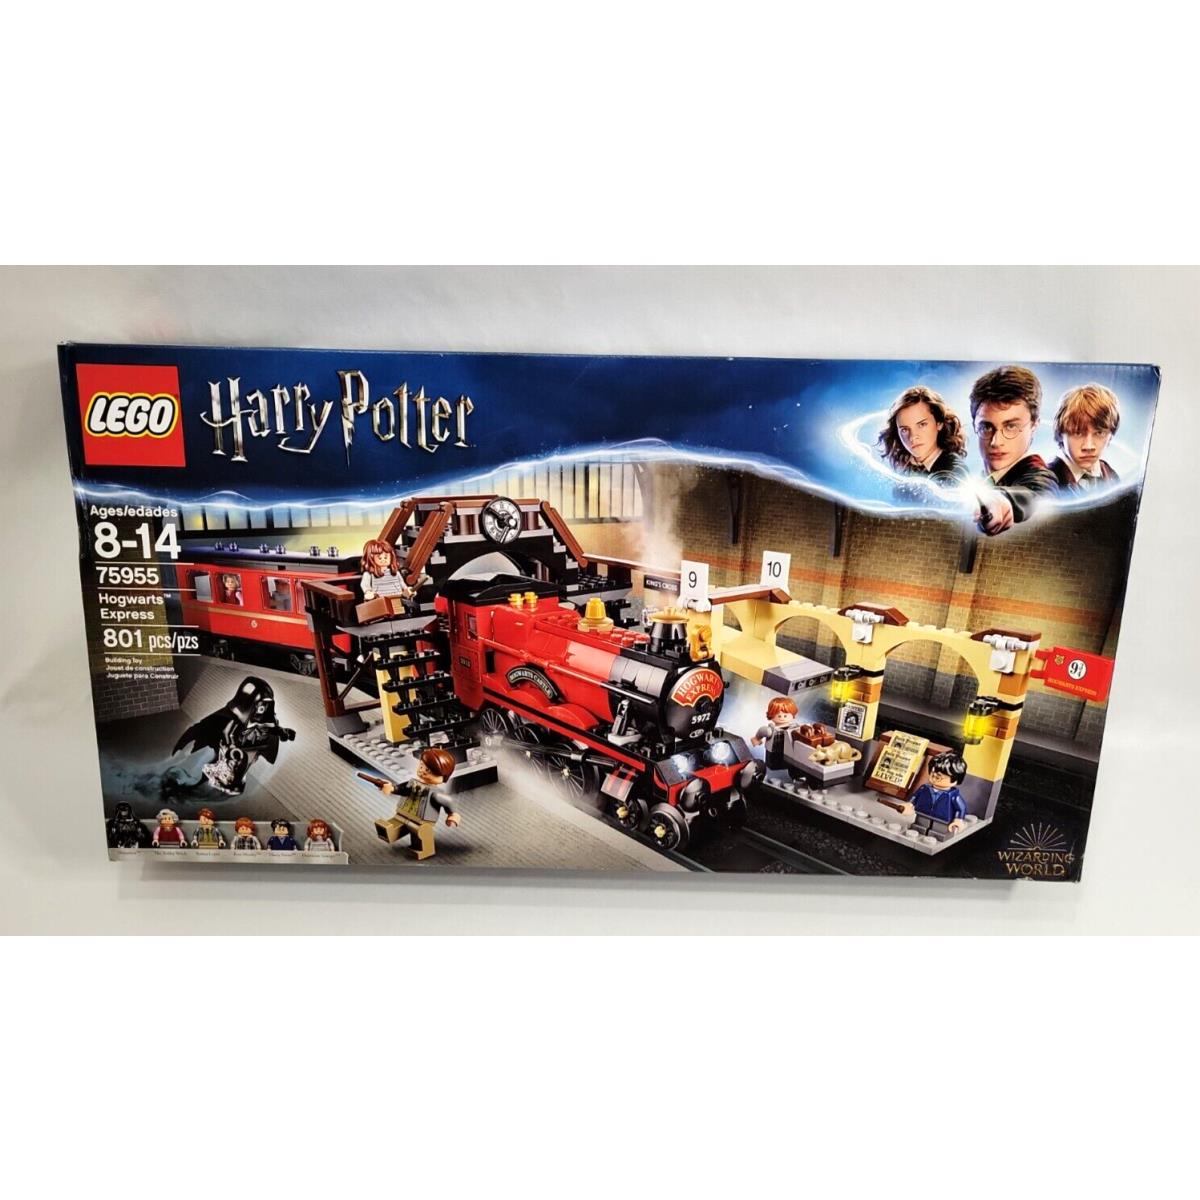 Lego Harry Potter TM - 75955 Hogwarts Express 801pcs - IN Hand